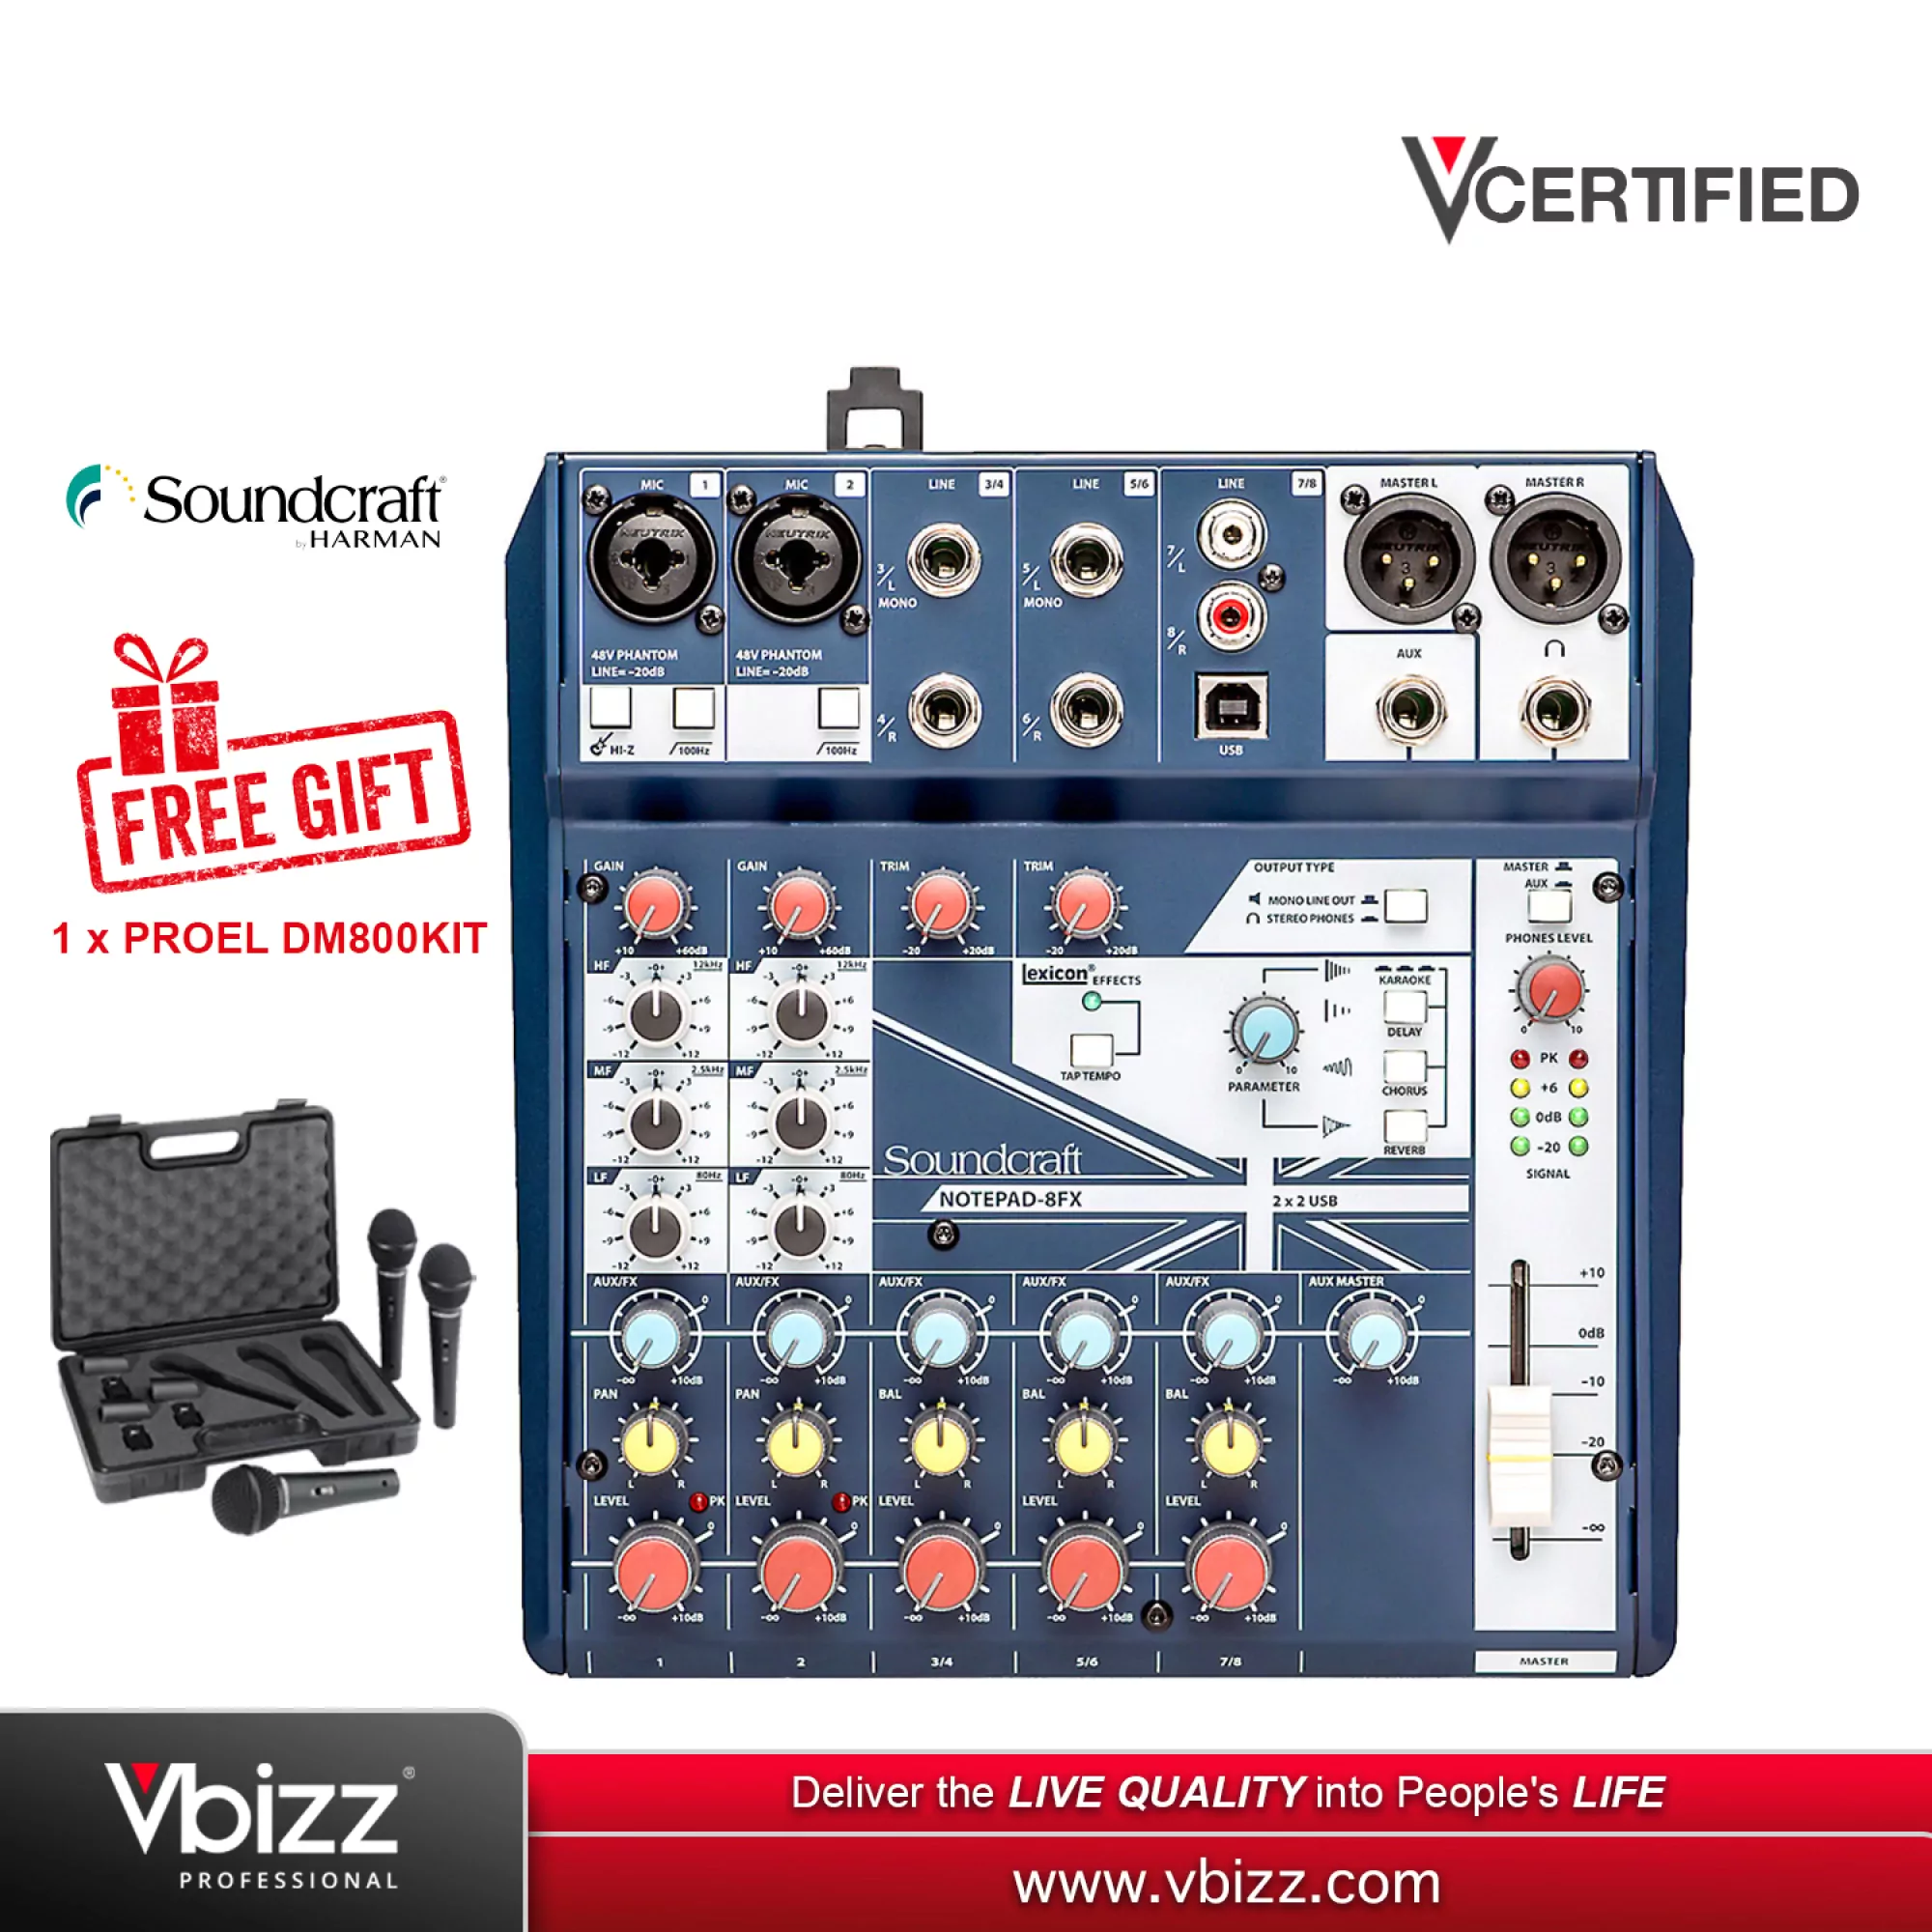 Soundcraft NOTEPAD 8FX Audio Analog Mixer Vbizz